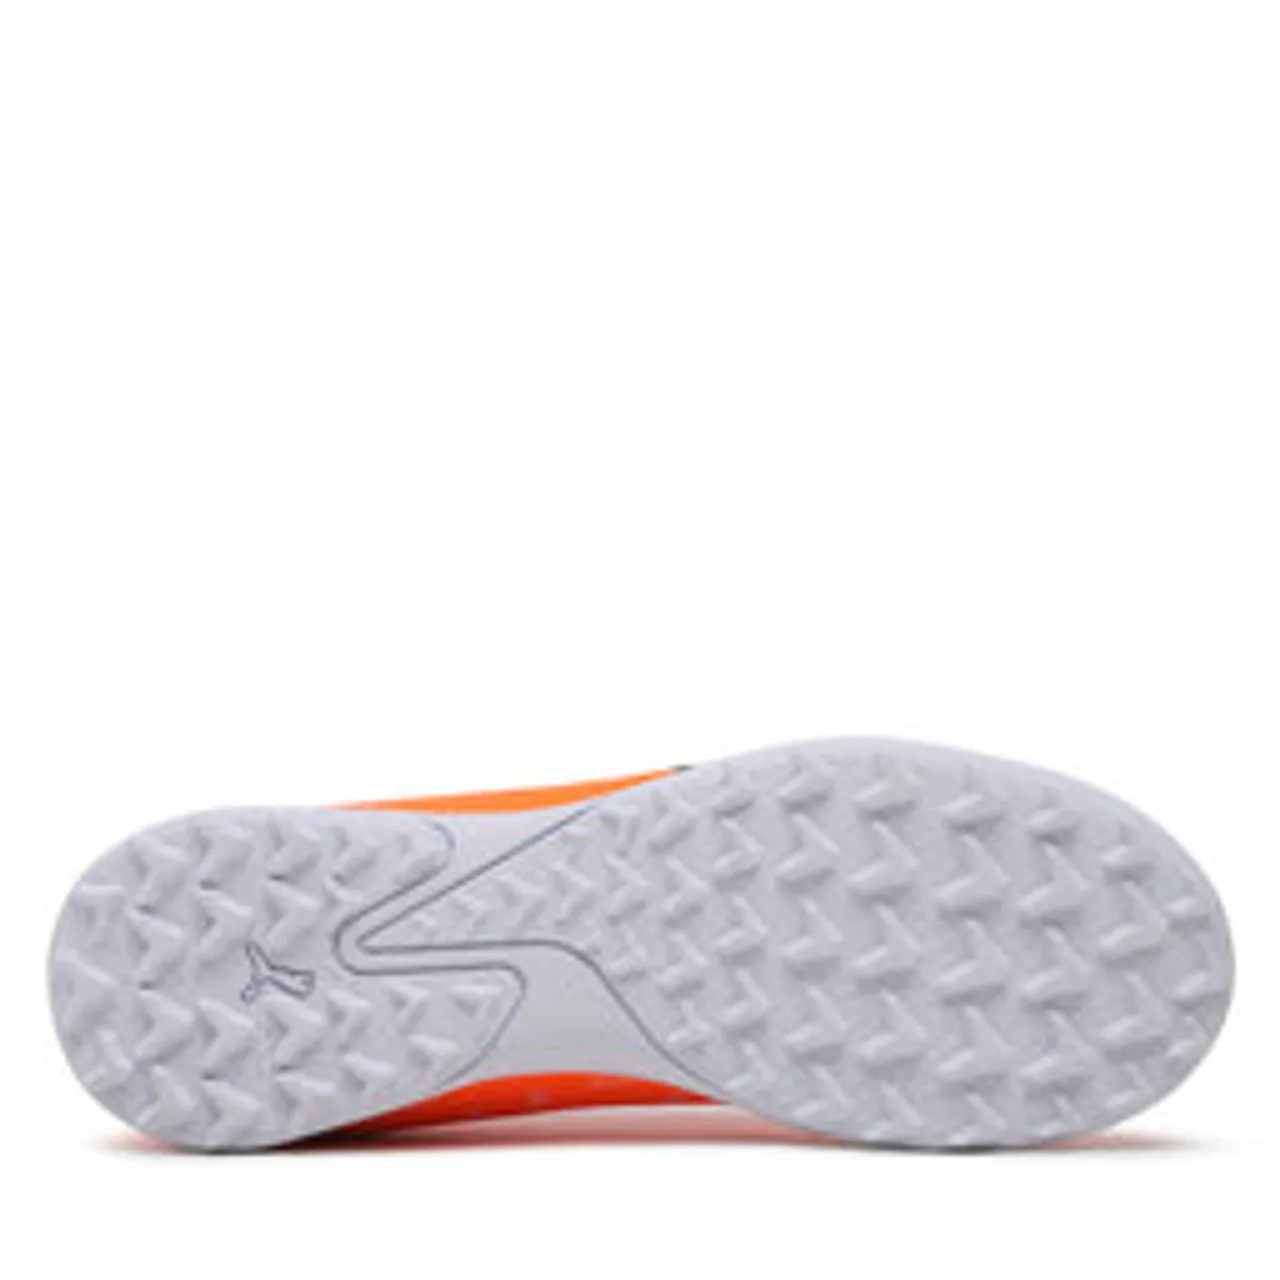 Schuhe Puma Ultra Play Tt Jr 107236 01 Orange/White/Blue